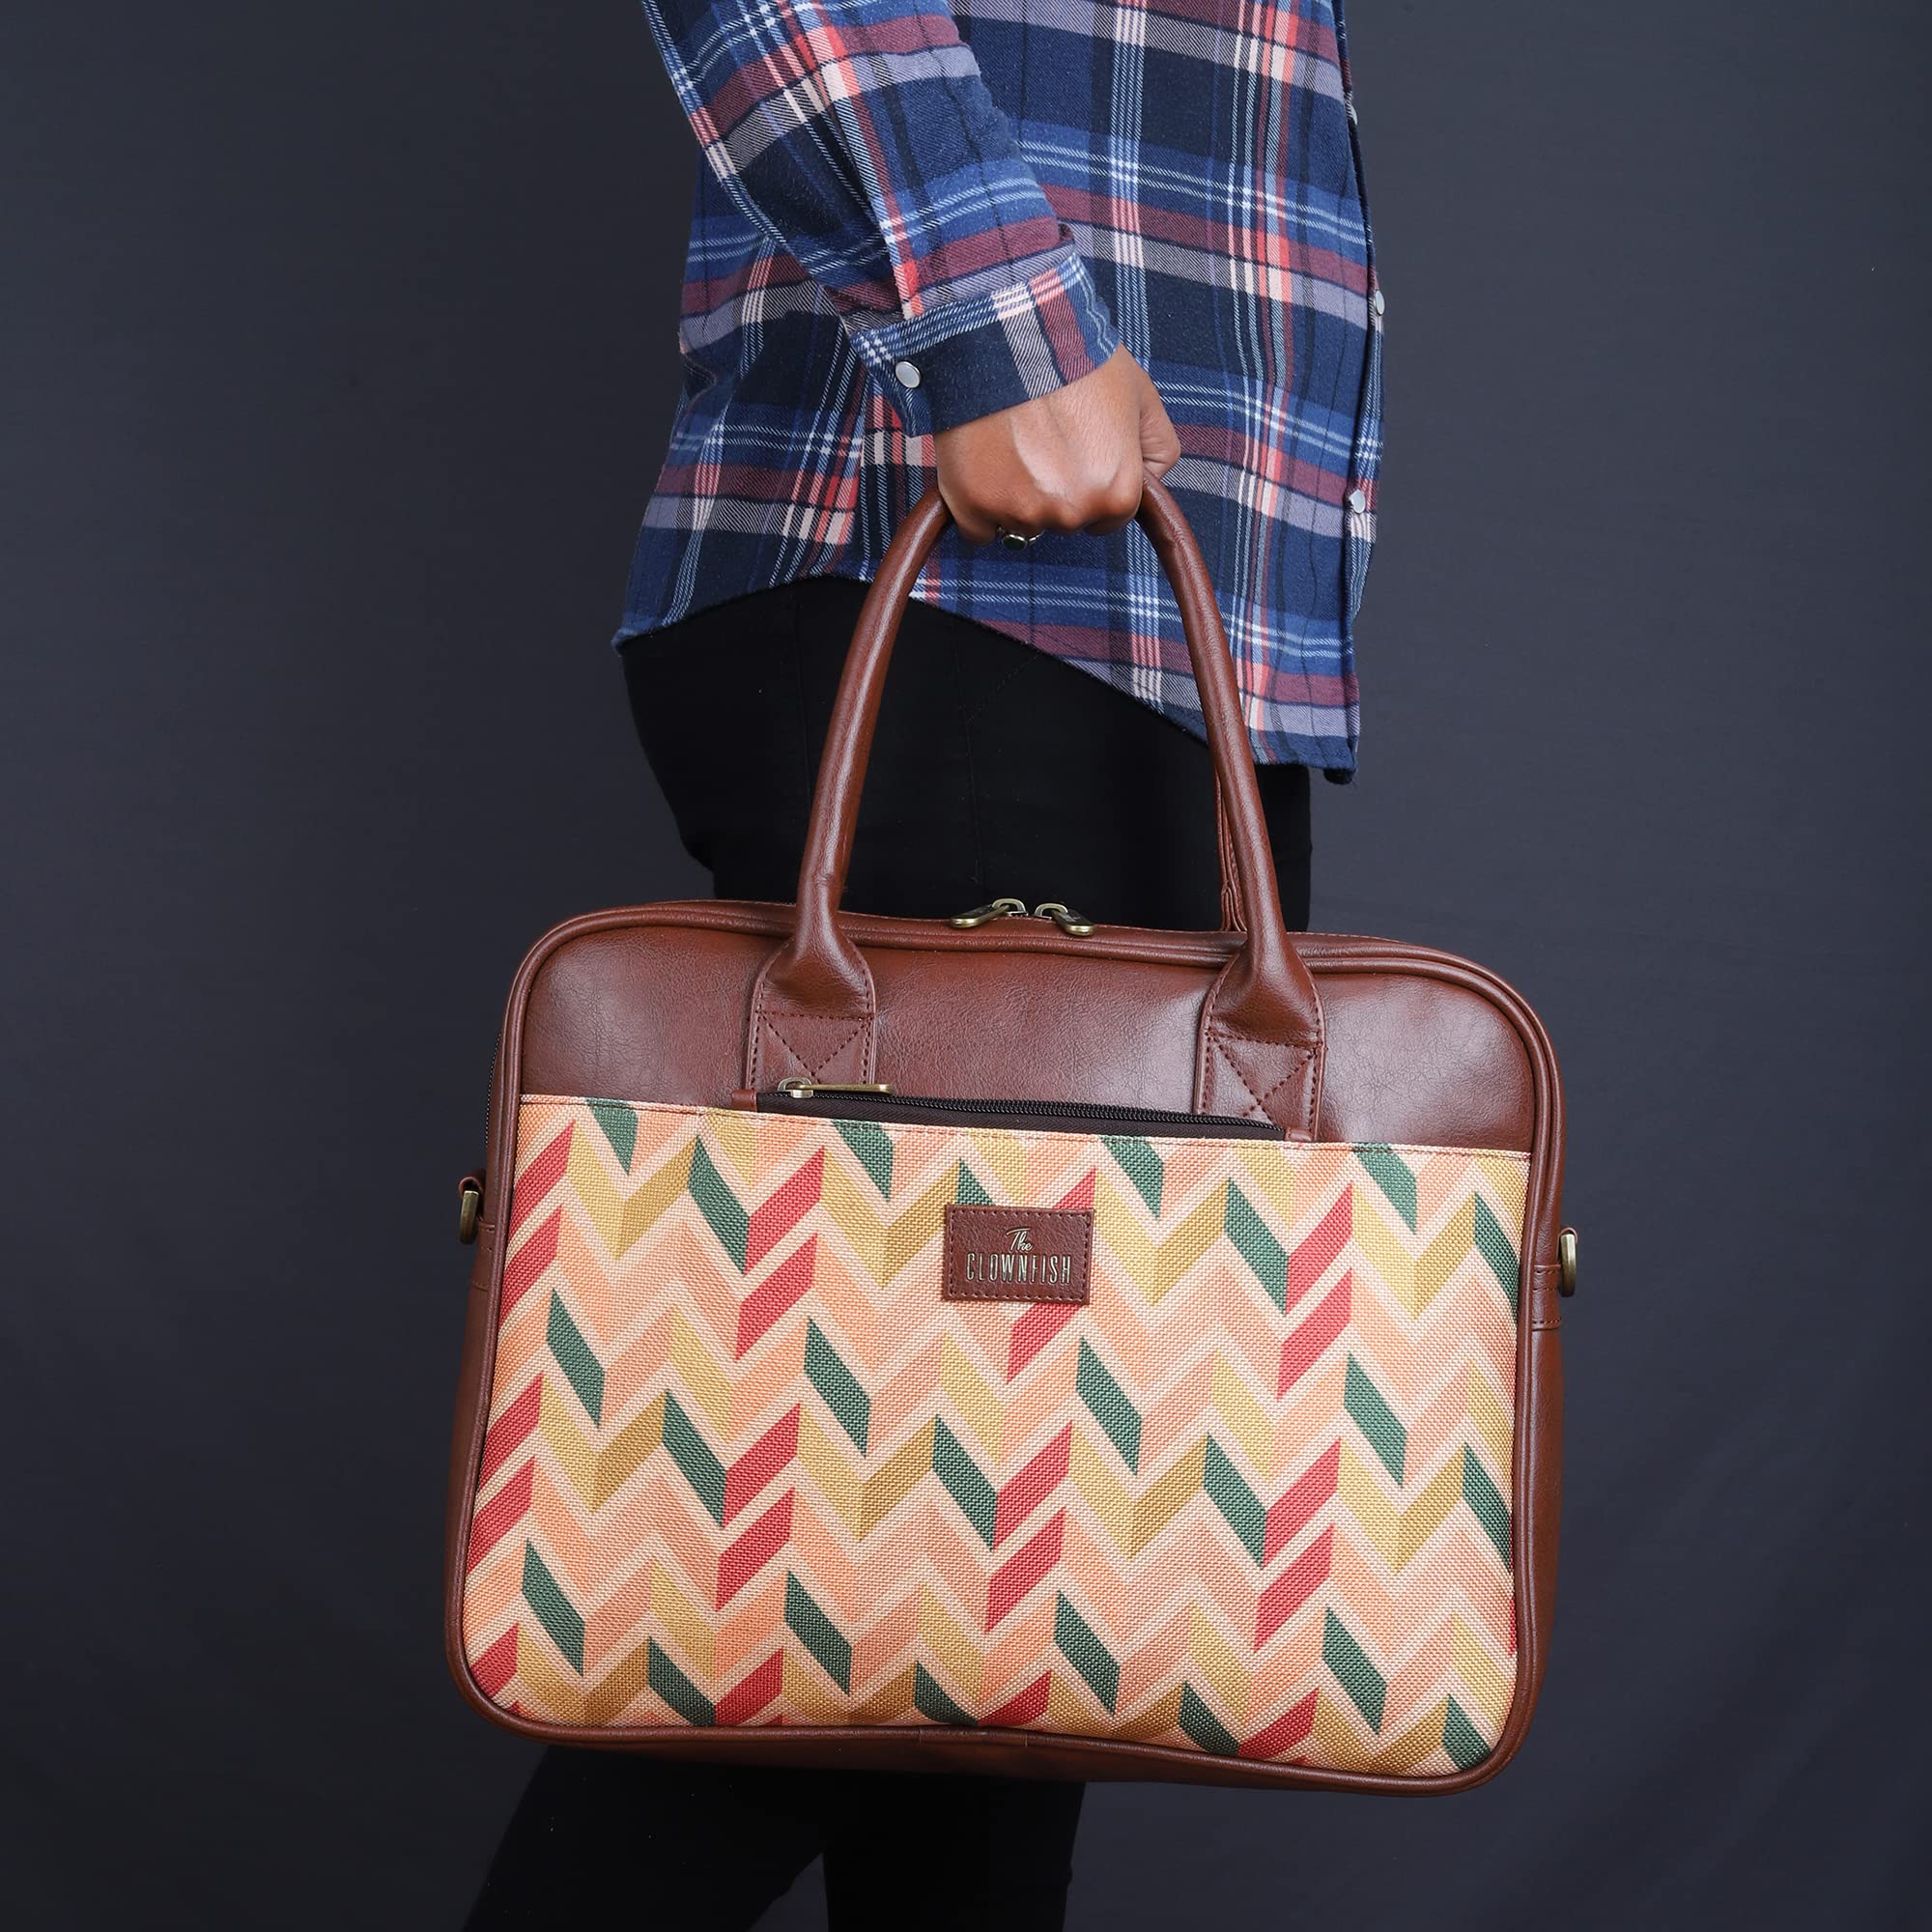 The Clownfish Deborah Series 15.6 inch Laptop Bag for Women Printed Handicraft Fabric & Faux Leather Office Bag Briefcase Messenger Sling Handbag Business Bag (Cream)